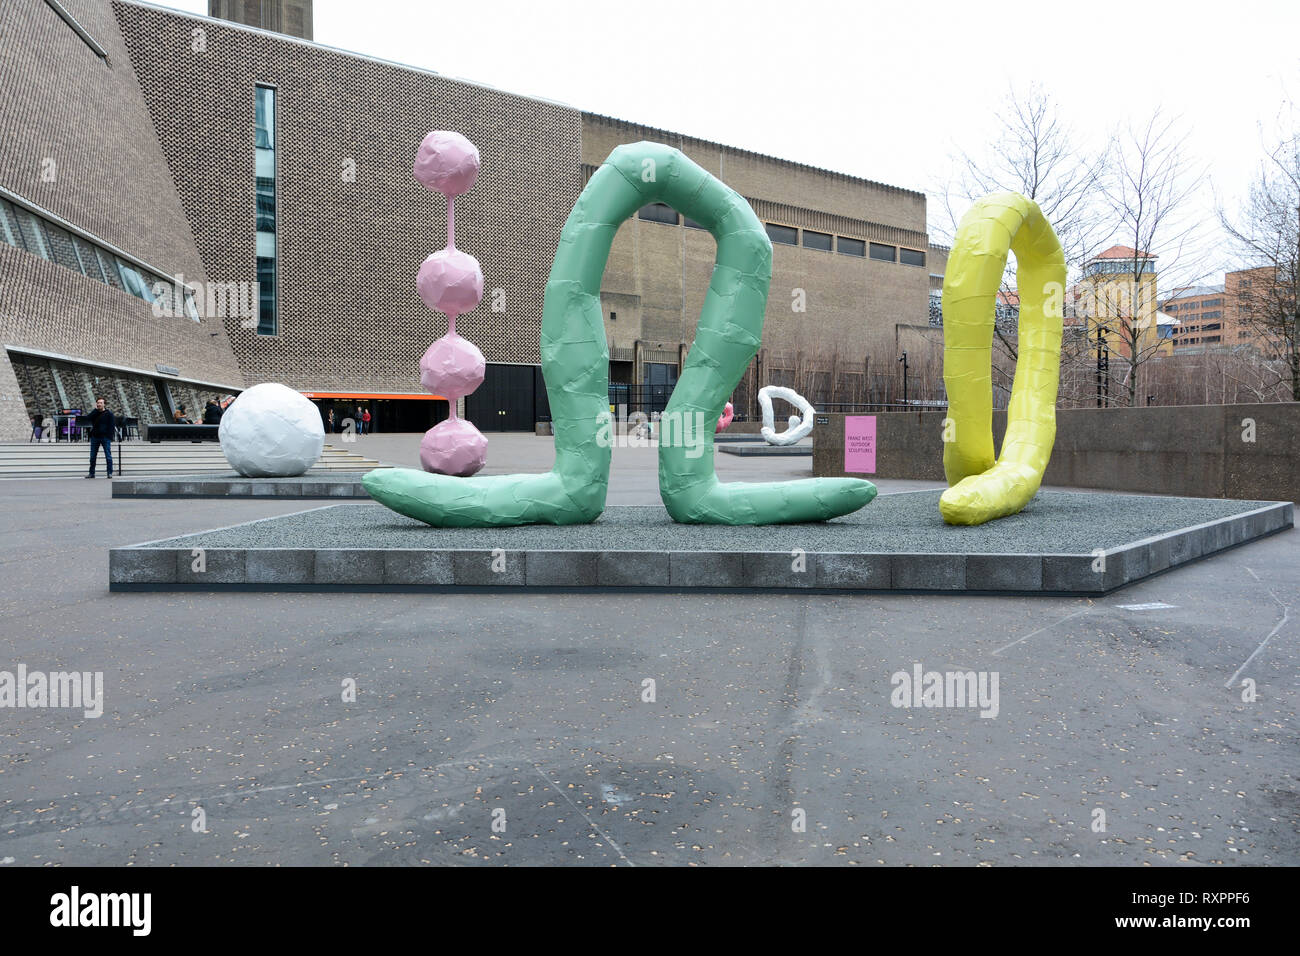 Franz West Alpha, Omega, Dorit und Kugel Skulpturen außerhalb des Hauses,  Tate Modern, London, UK Stockfotografie - Alamy